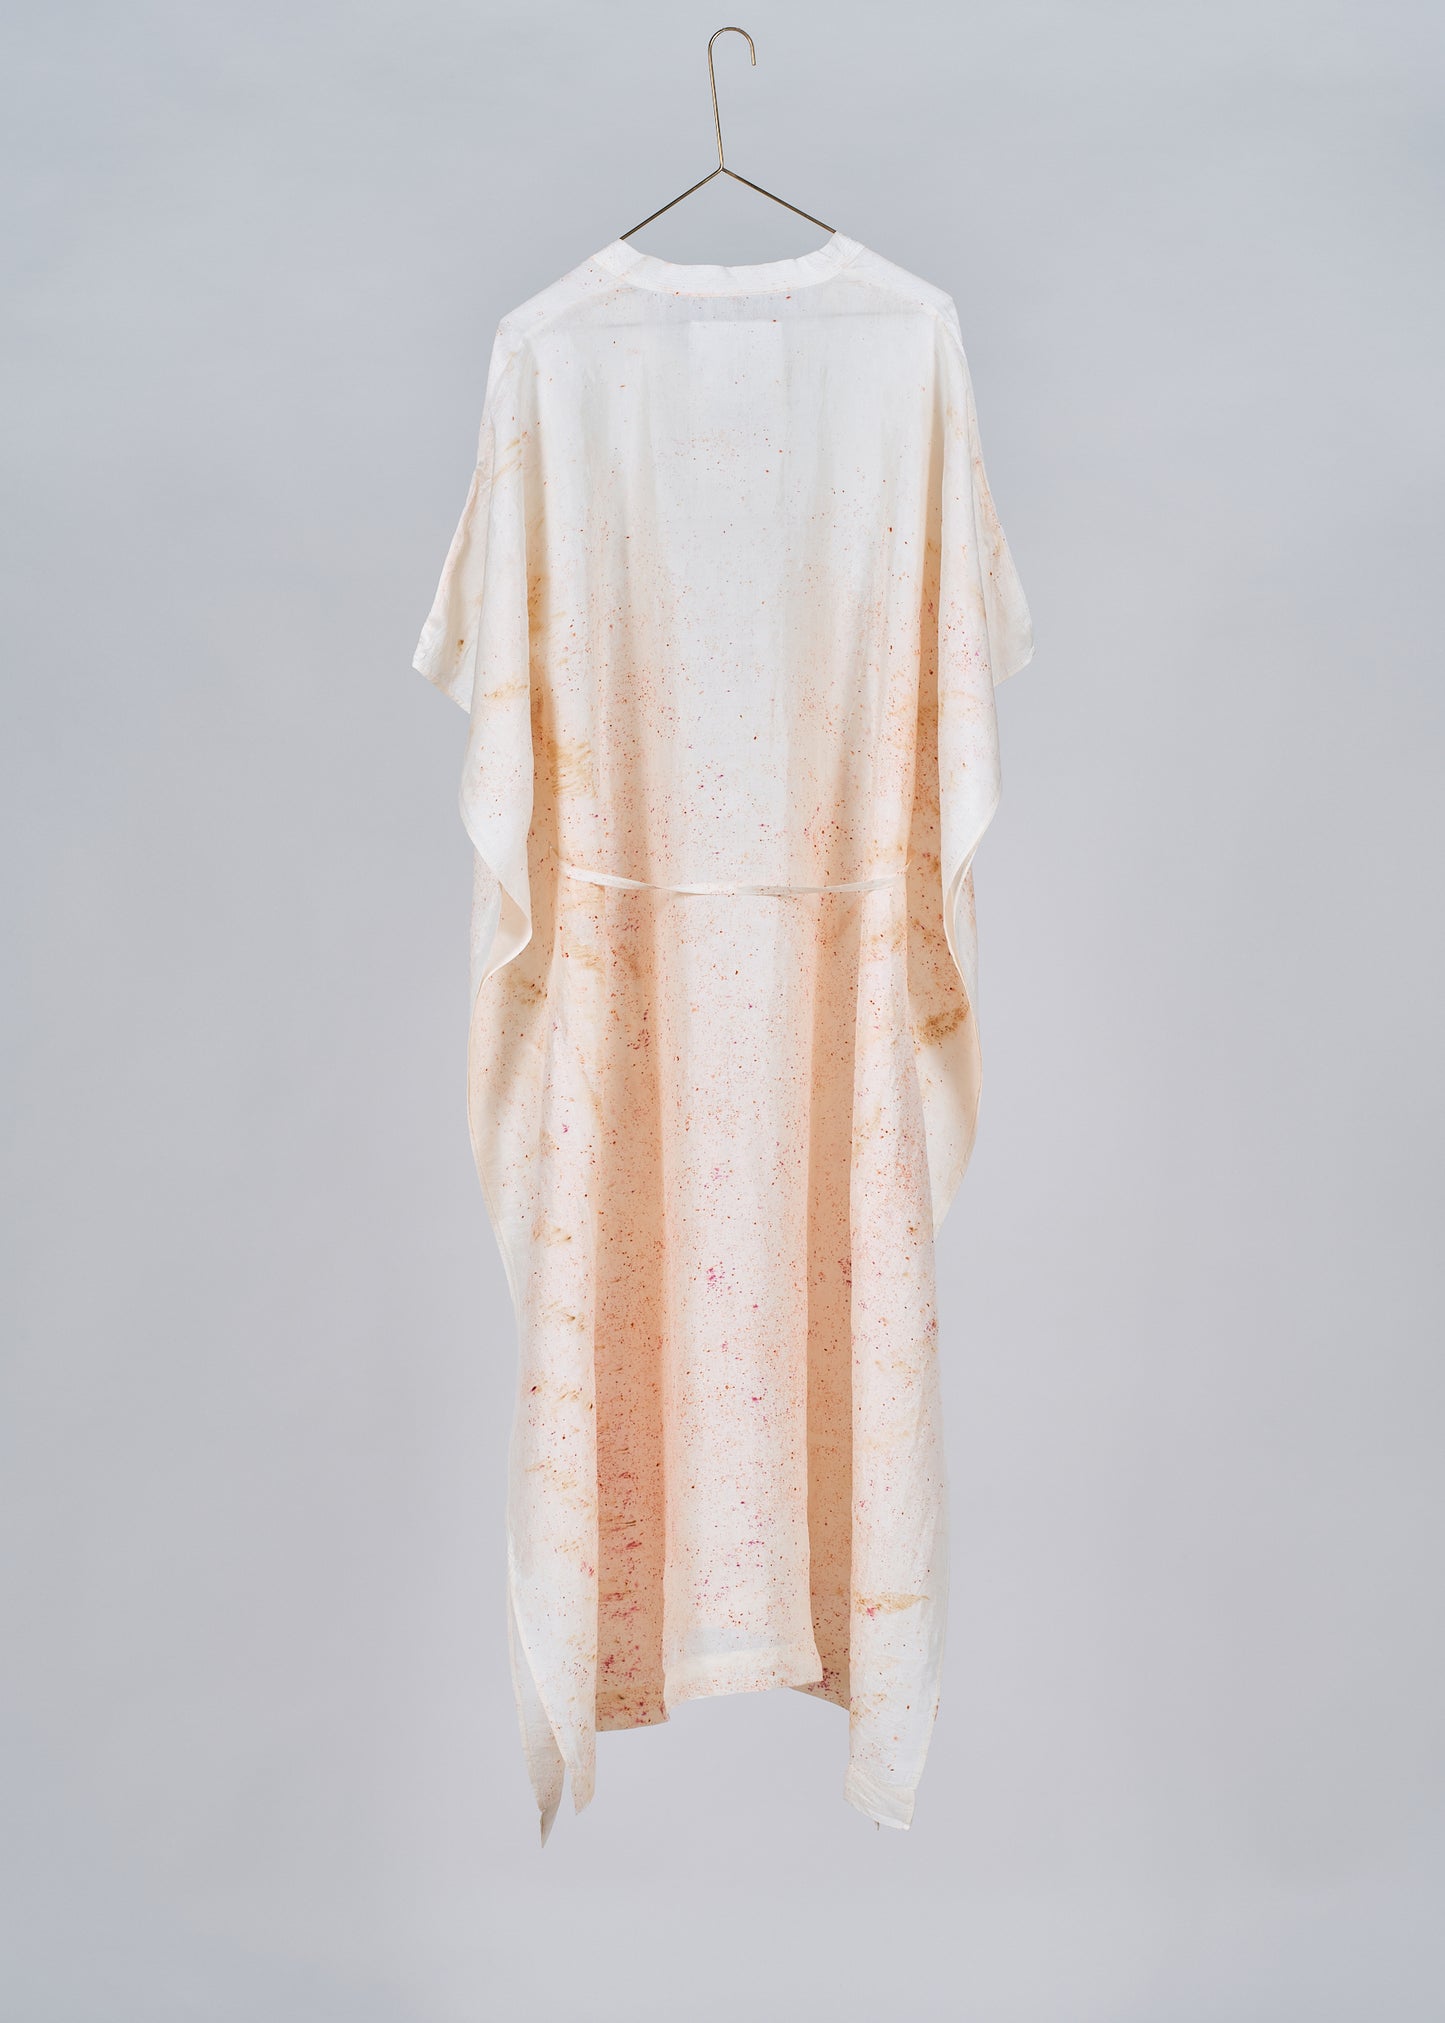 HEGO DYE / handloom silk | JAPONAISERIE＃1